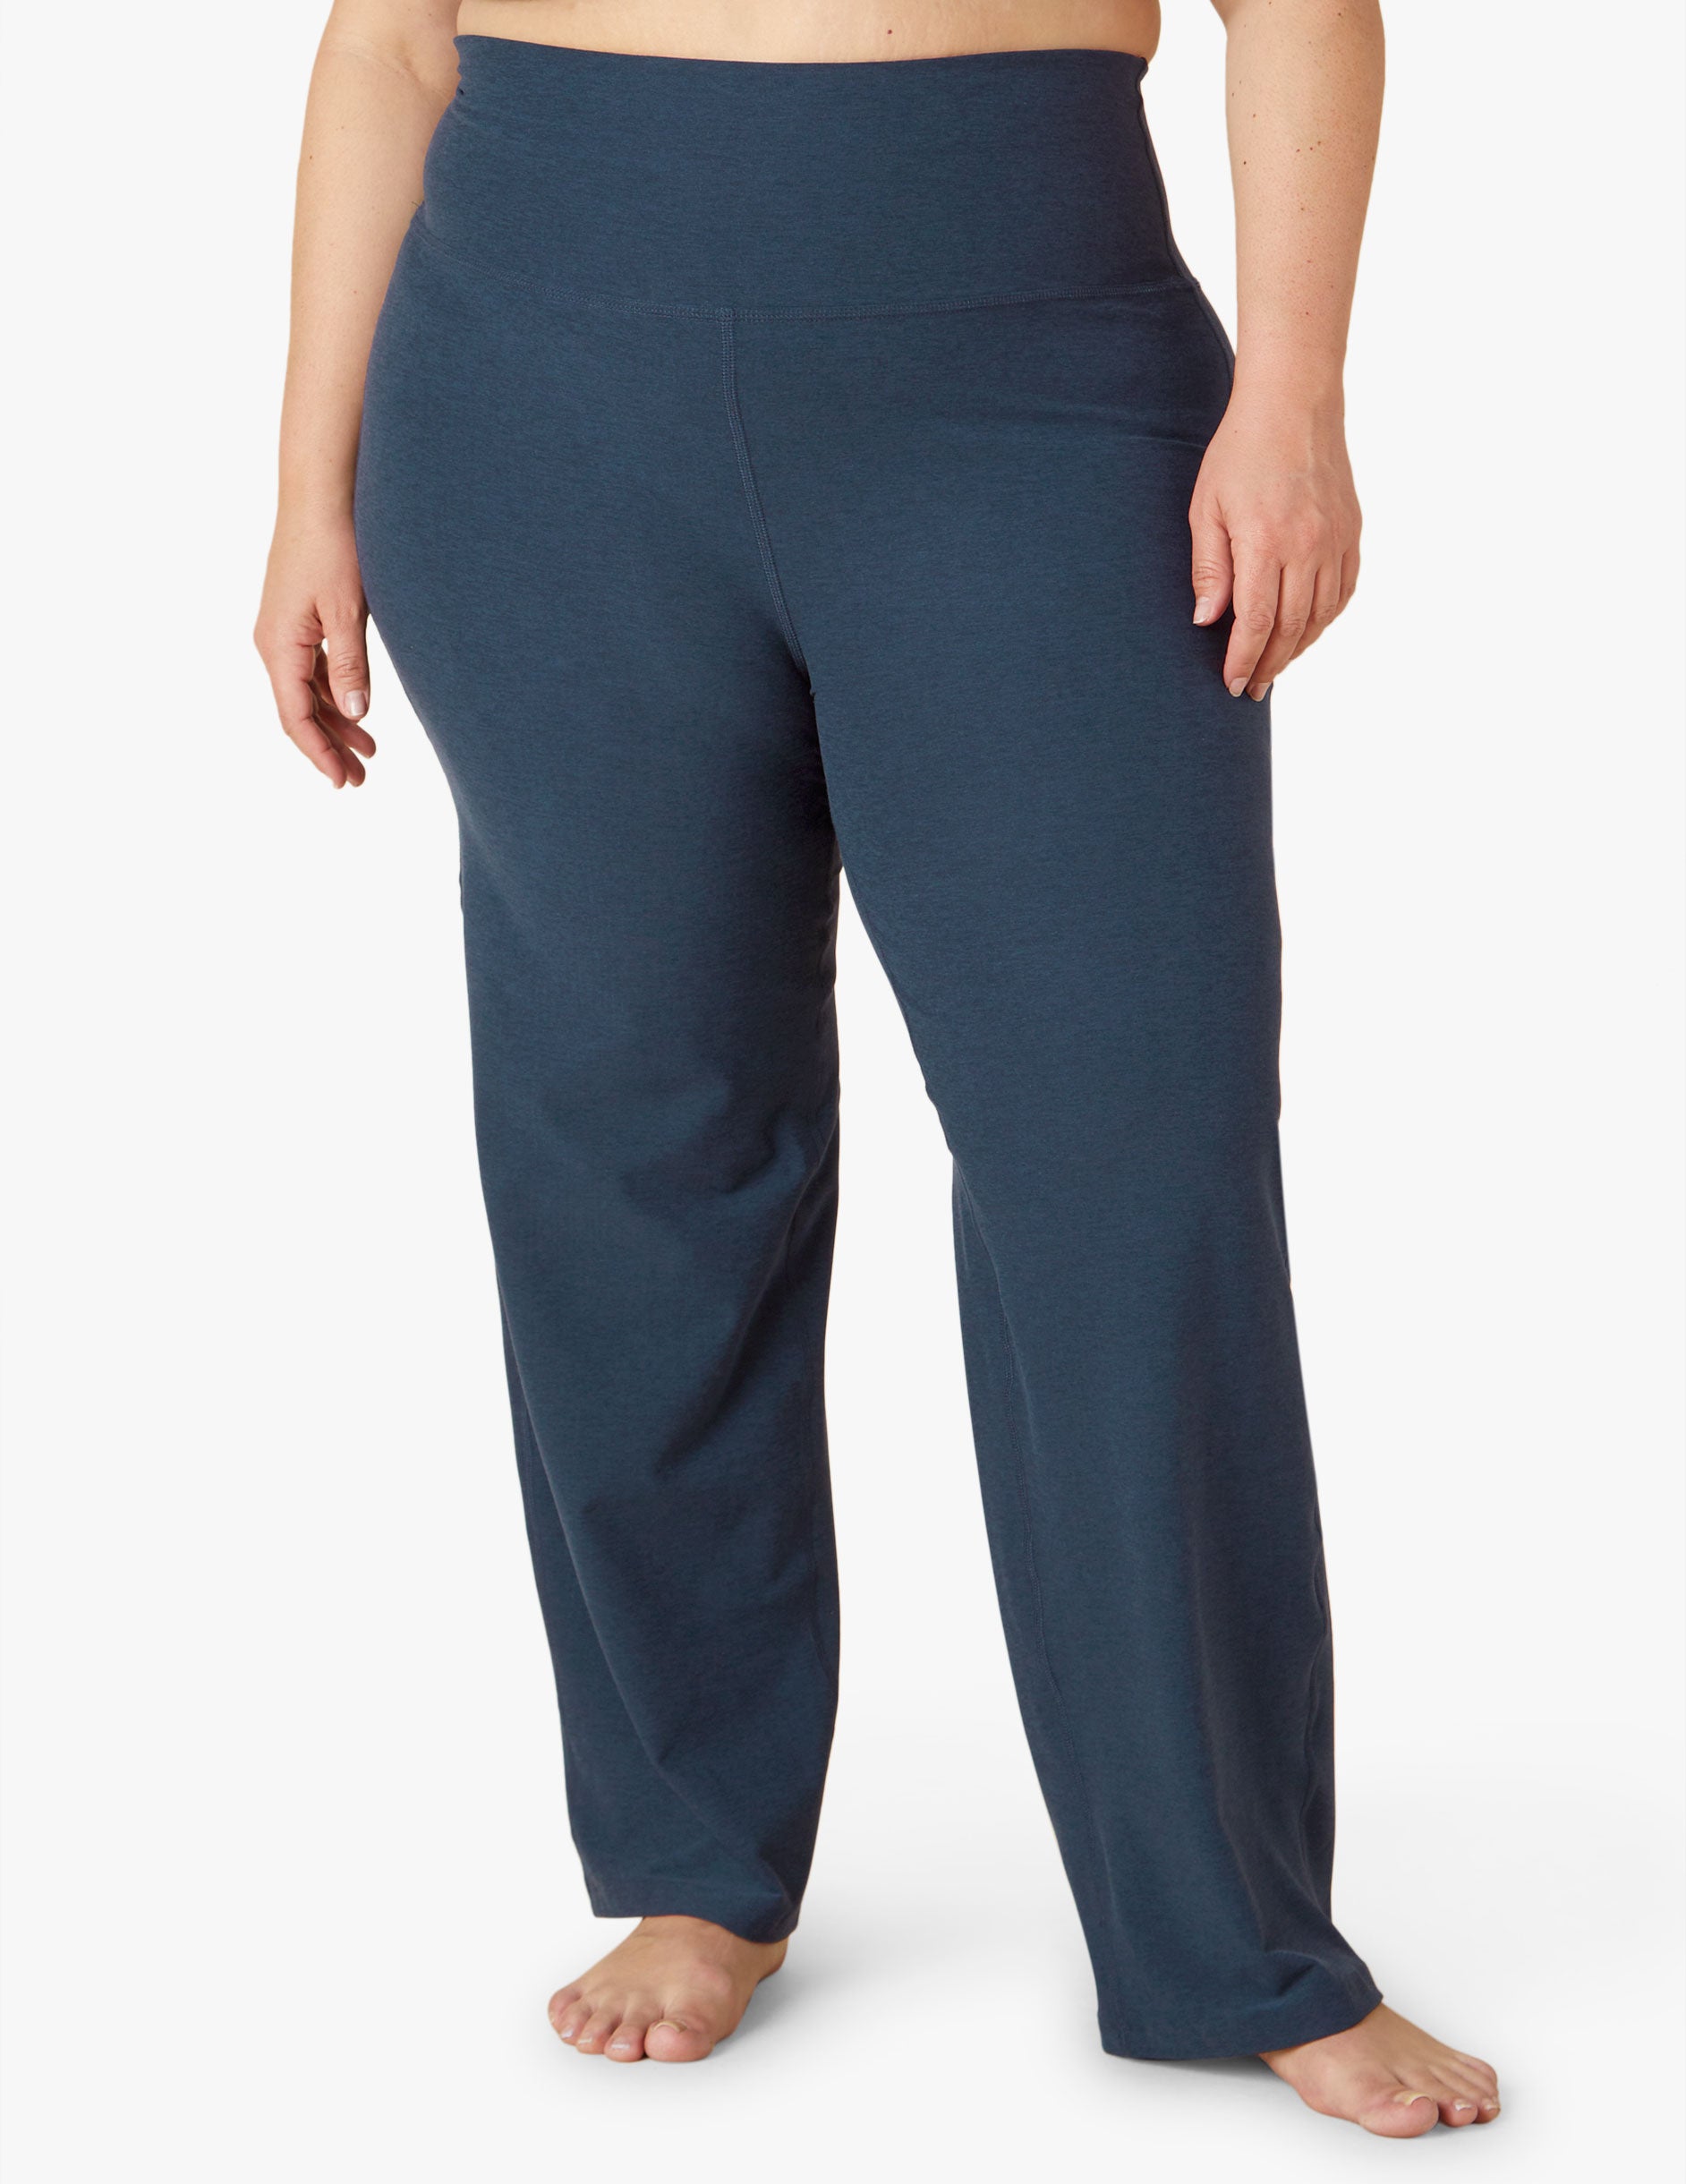 Balance Collection Yoga Pants large Navy Soft Stretchy